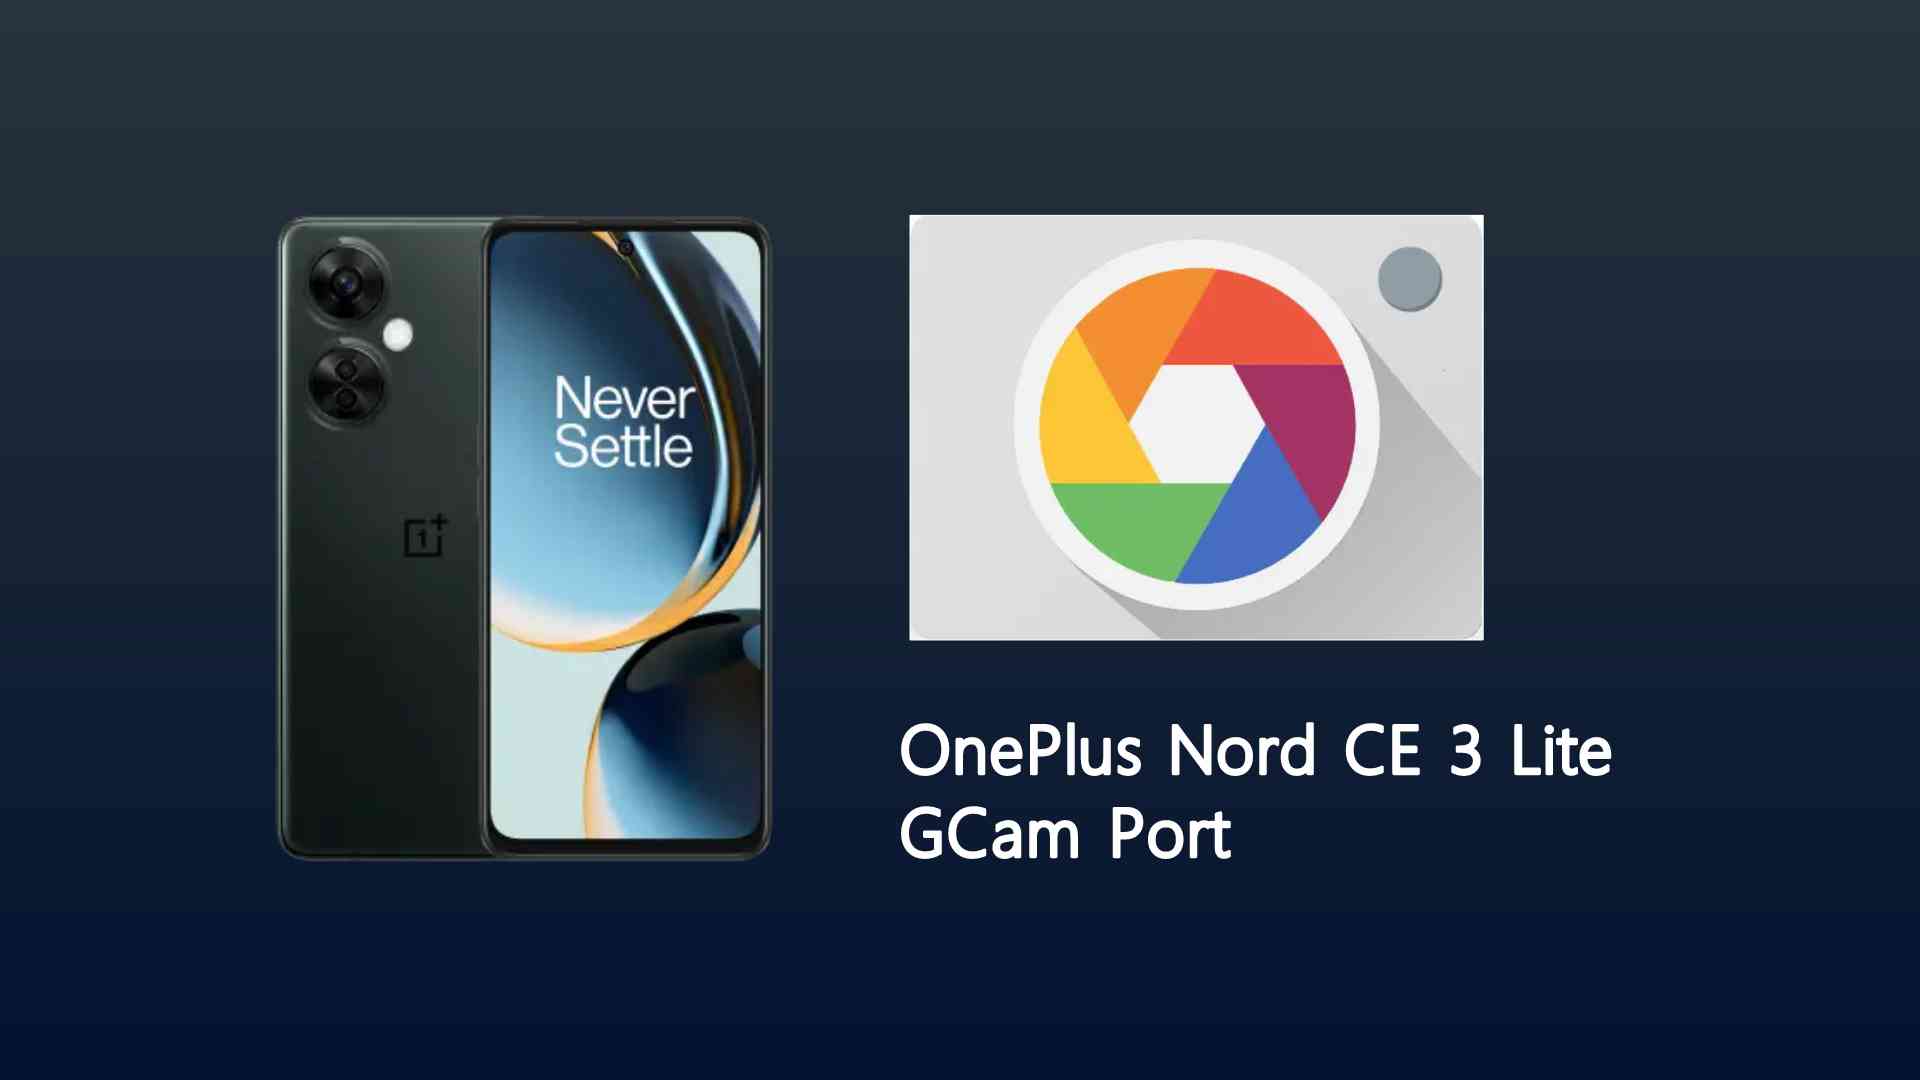 OnePlus Nord CE 3 Lite GCam Port